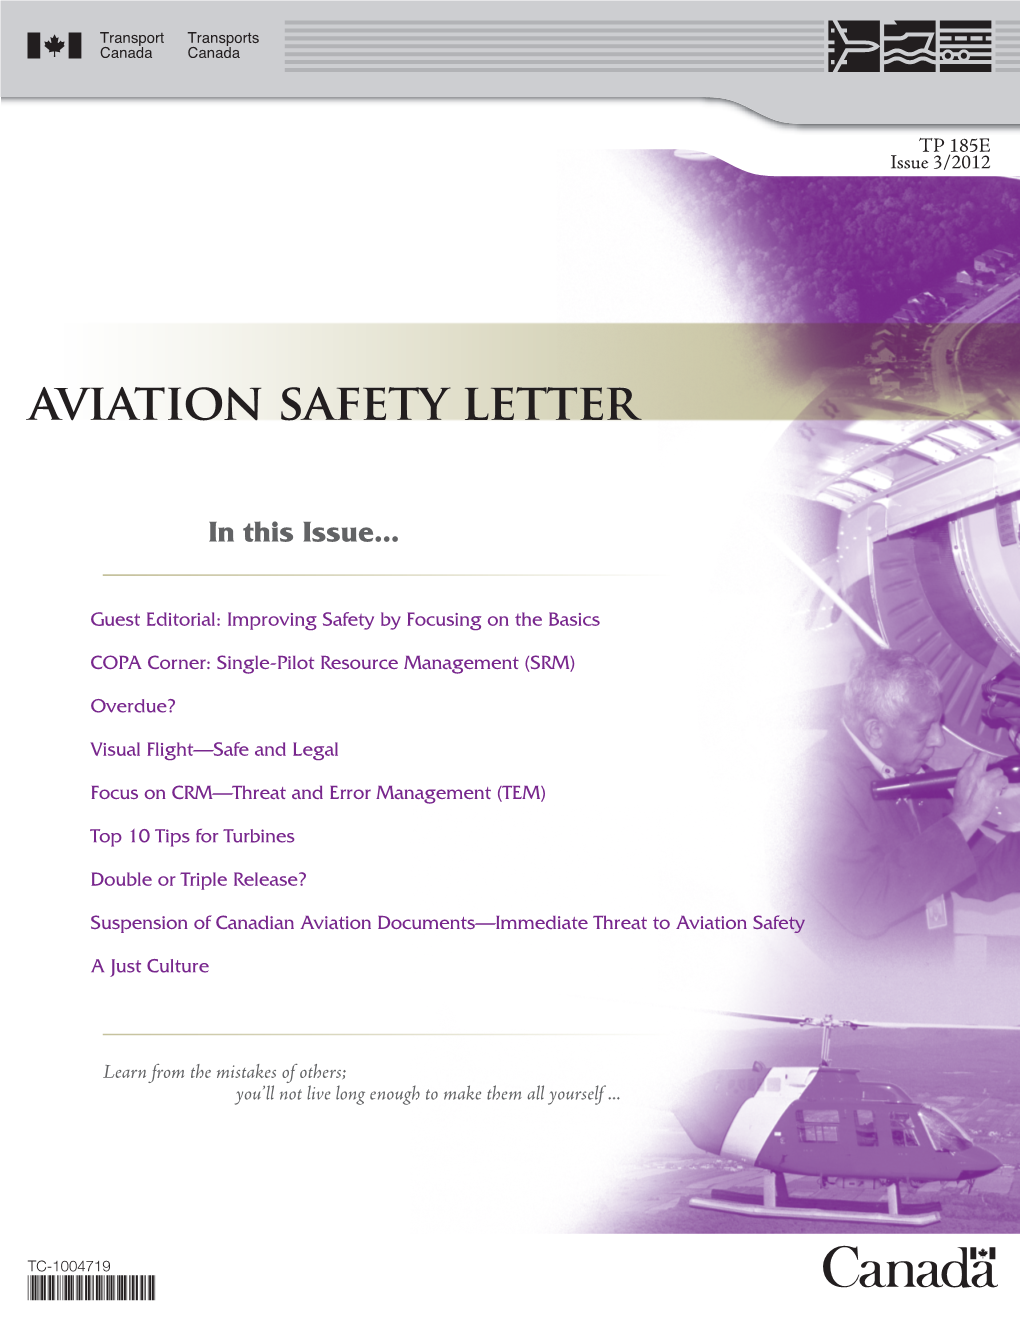 Aviation Safety Letter